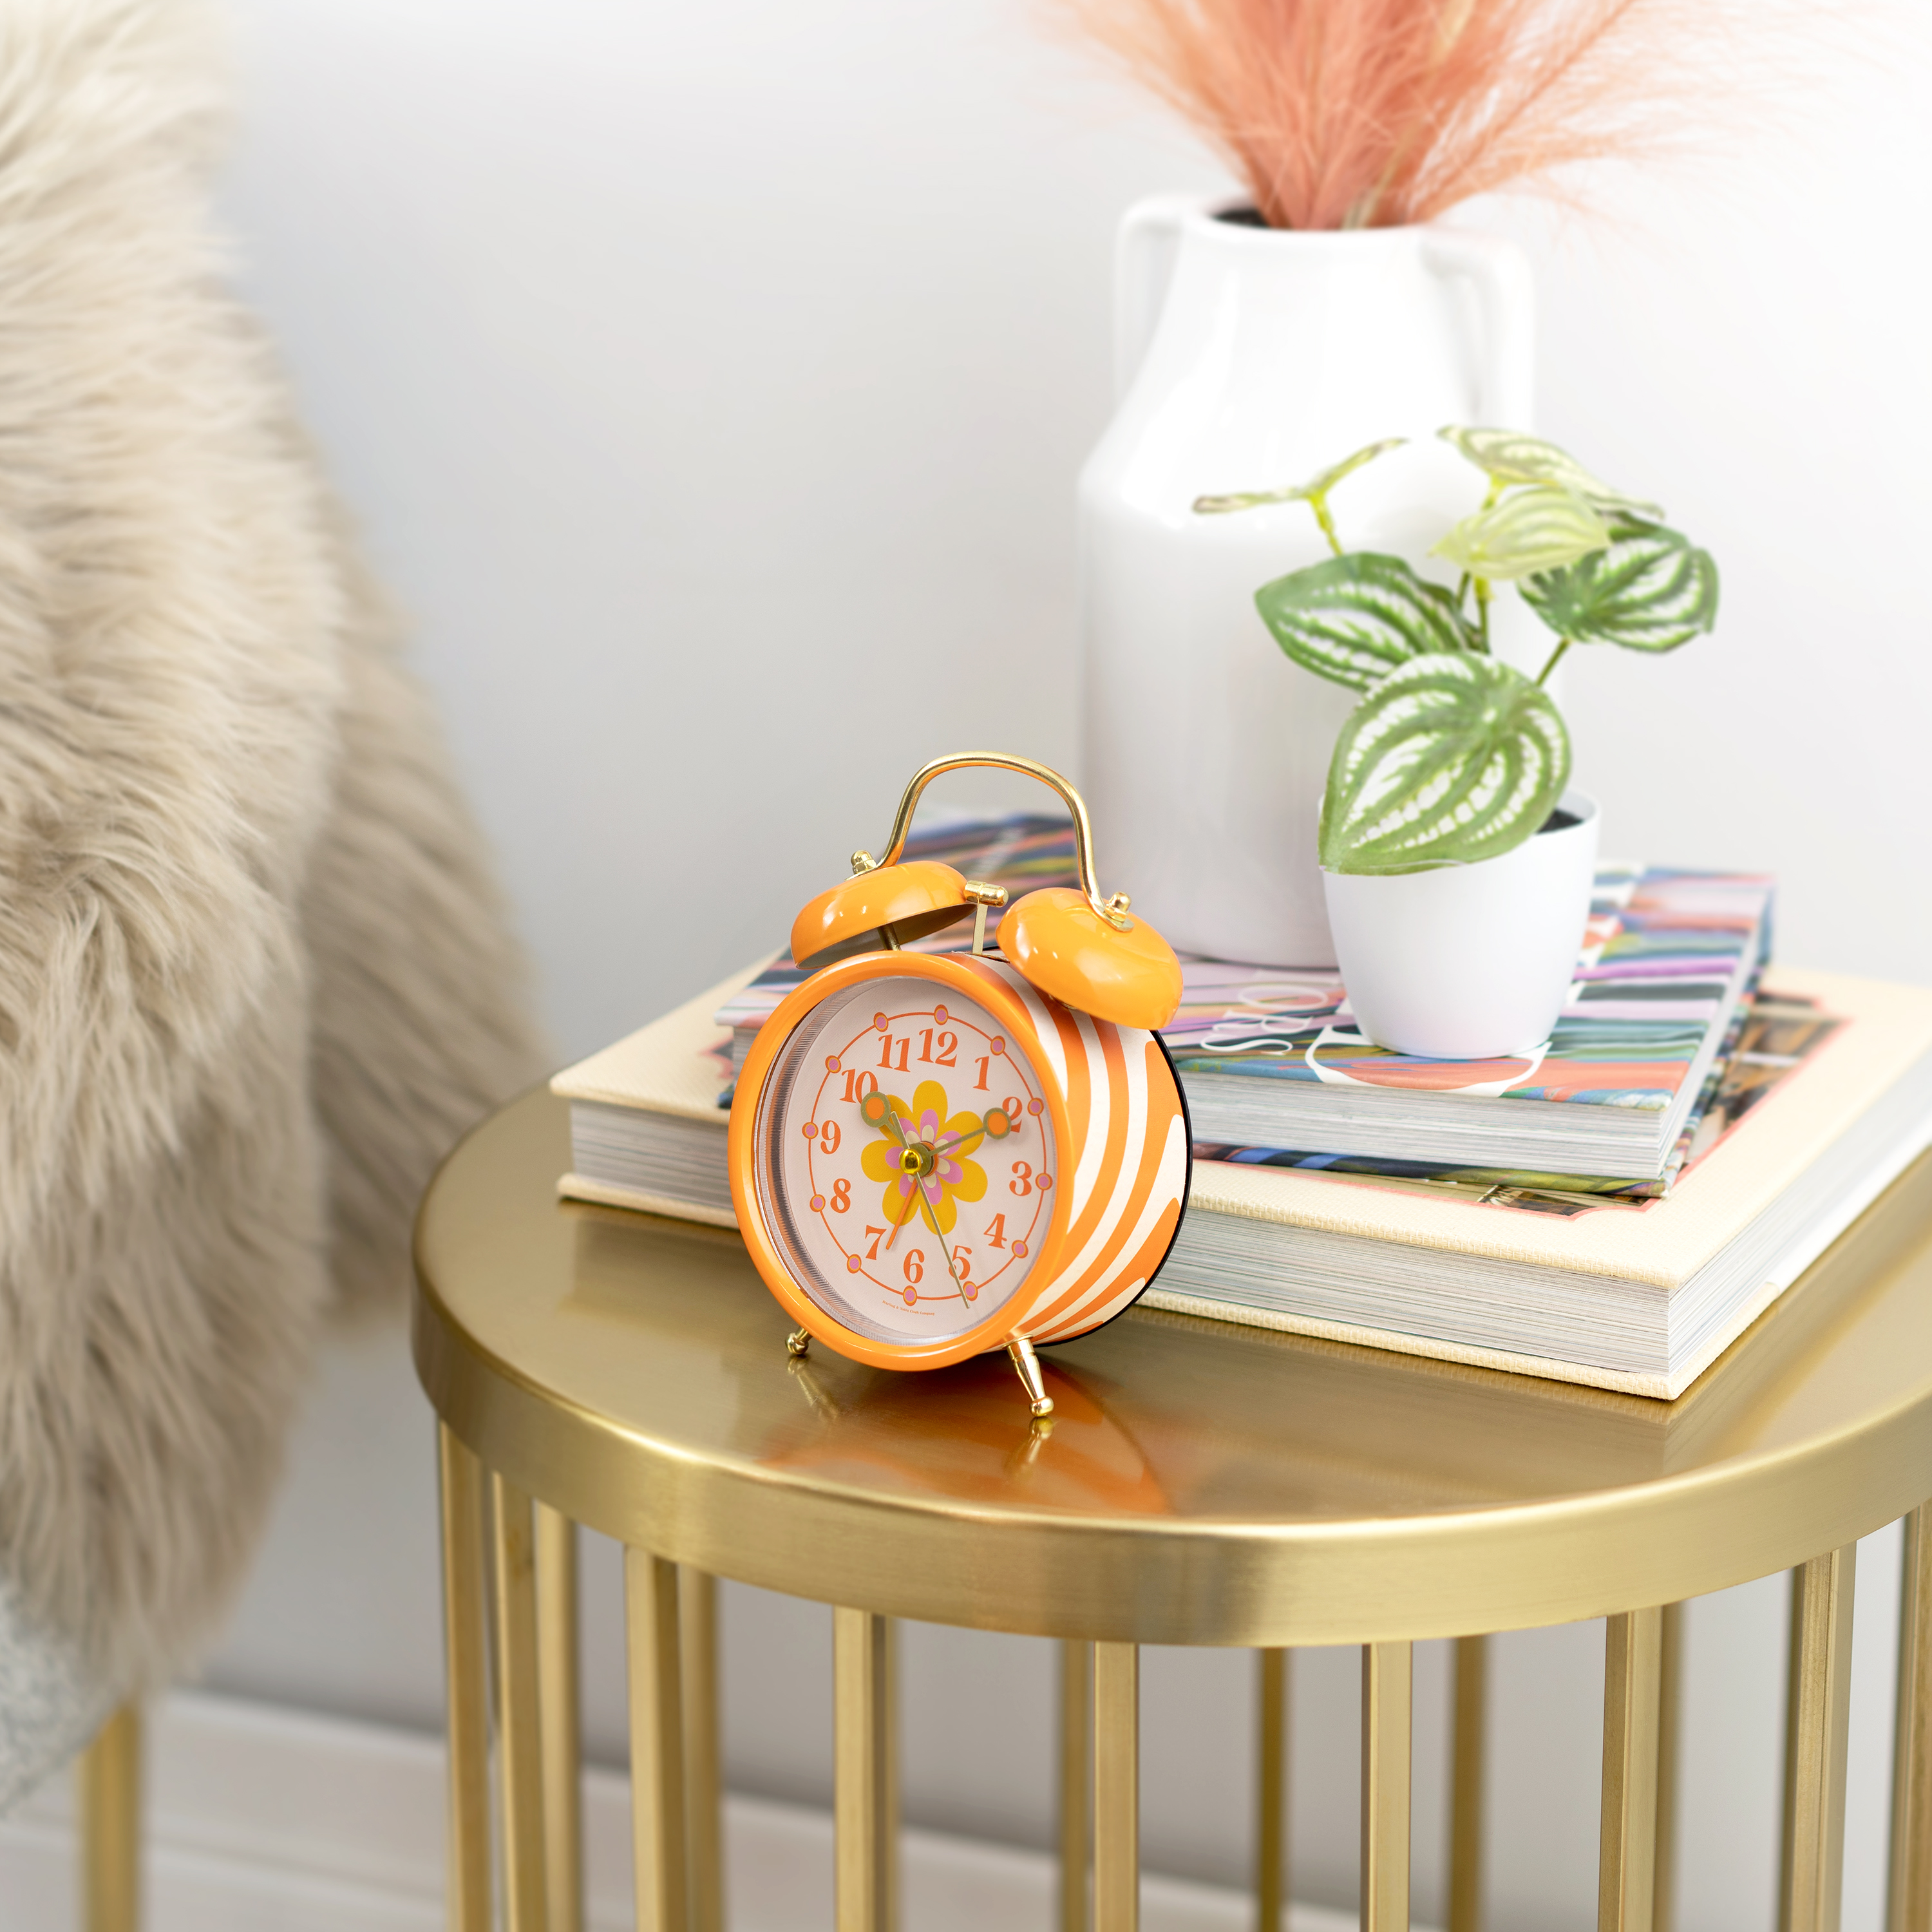 Mainstays Mini Floral Indoor Vintage Groovy Style Orange Table Top Analog Alarm Clock - image 5 of 5